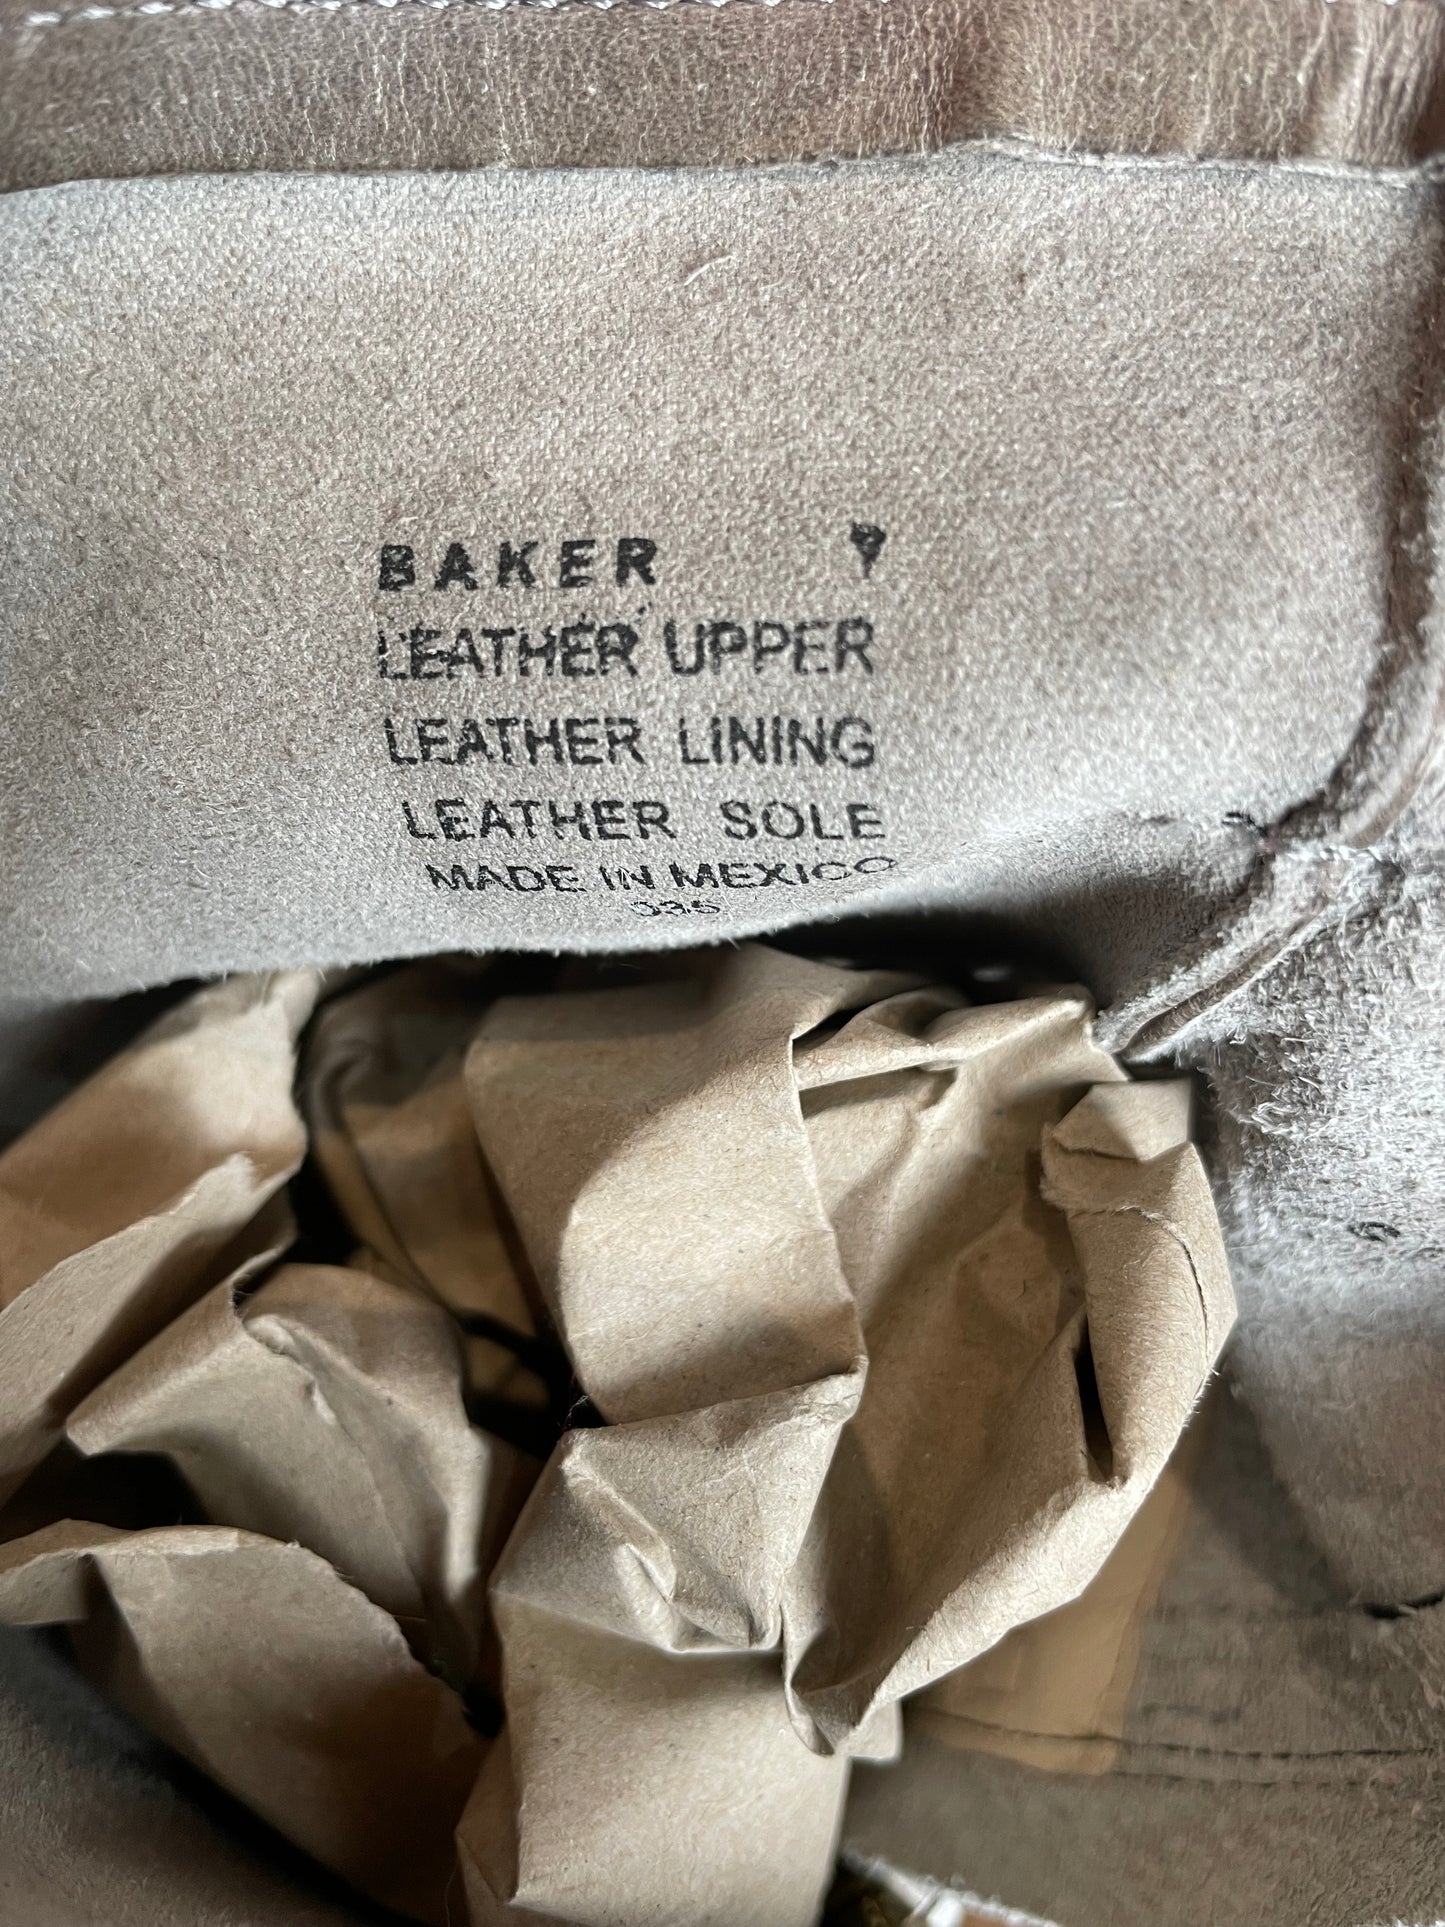 Steve Madden FREEBIRD leather Baker Western Boots size 4